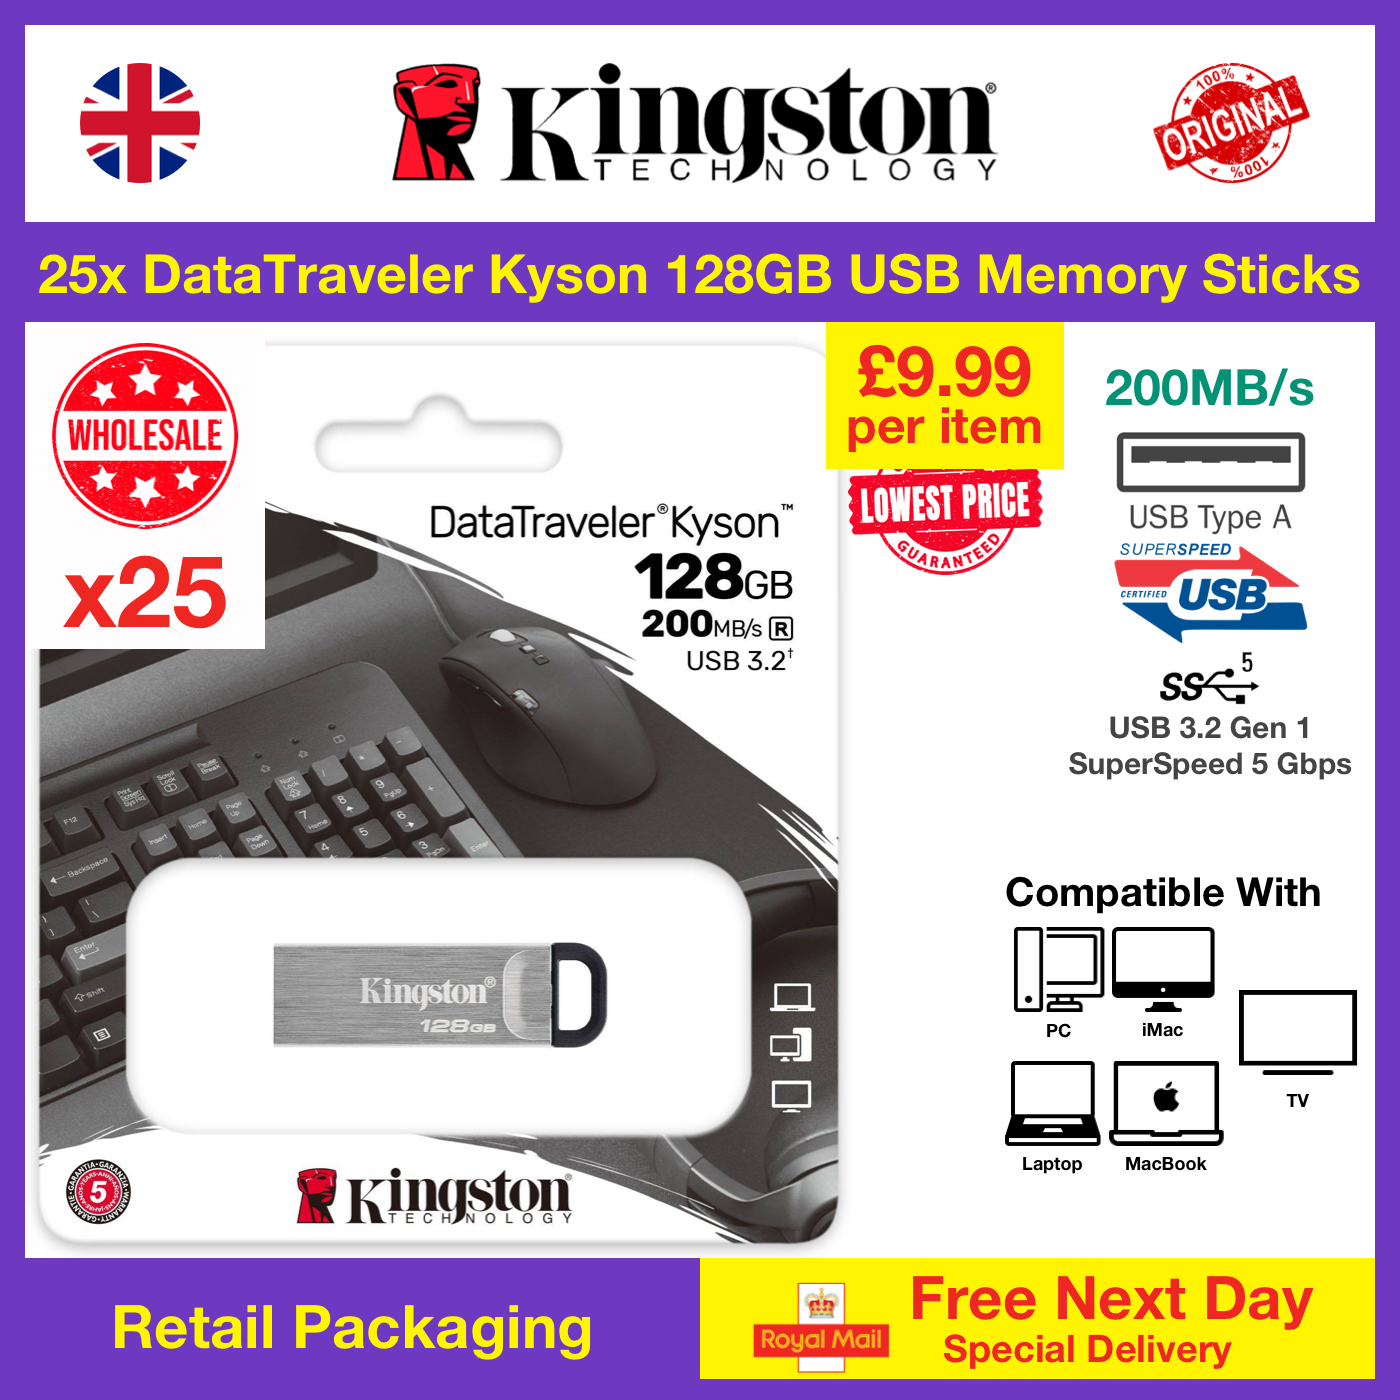 25x Kingston DataTraveler Kyson 128GB USB Memory Stick Flash Drive Wholesale@1x